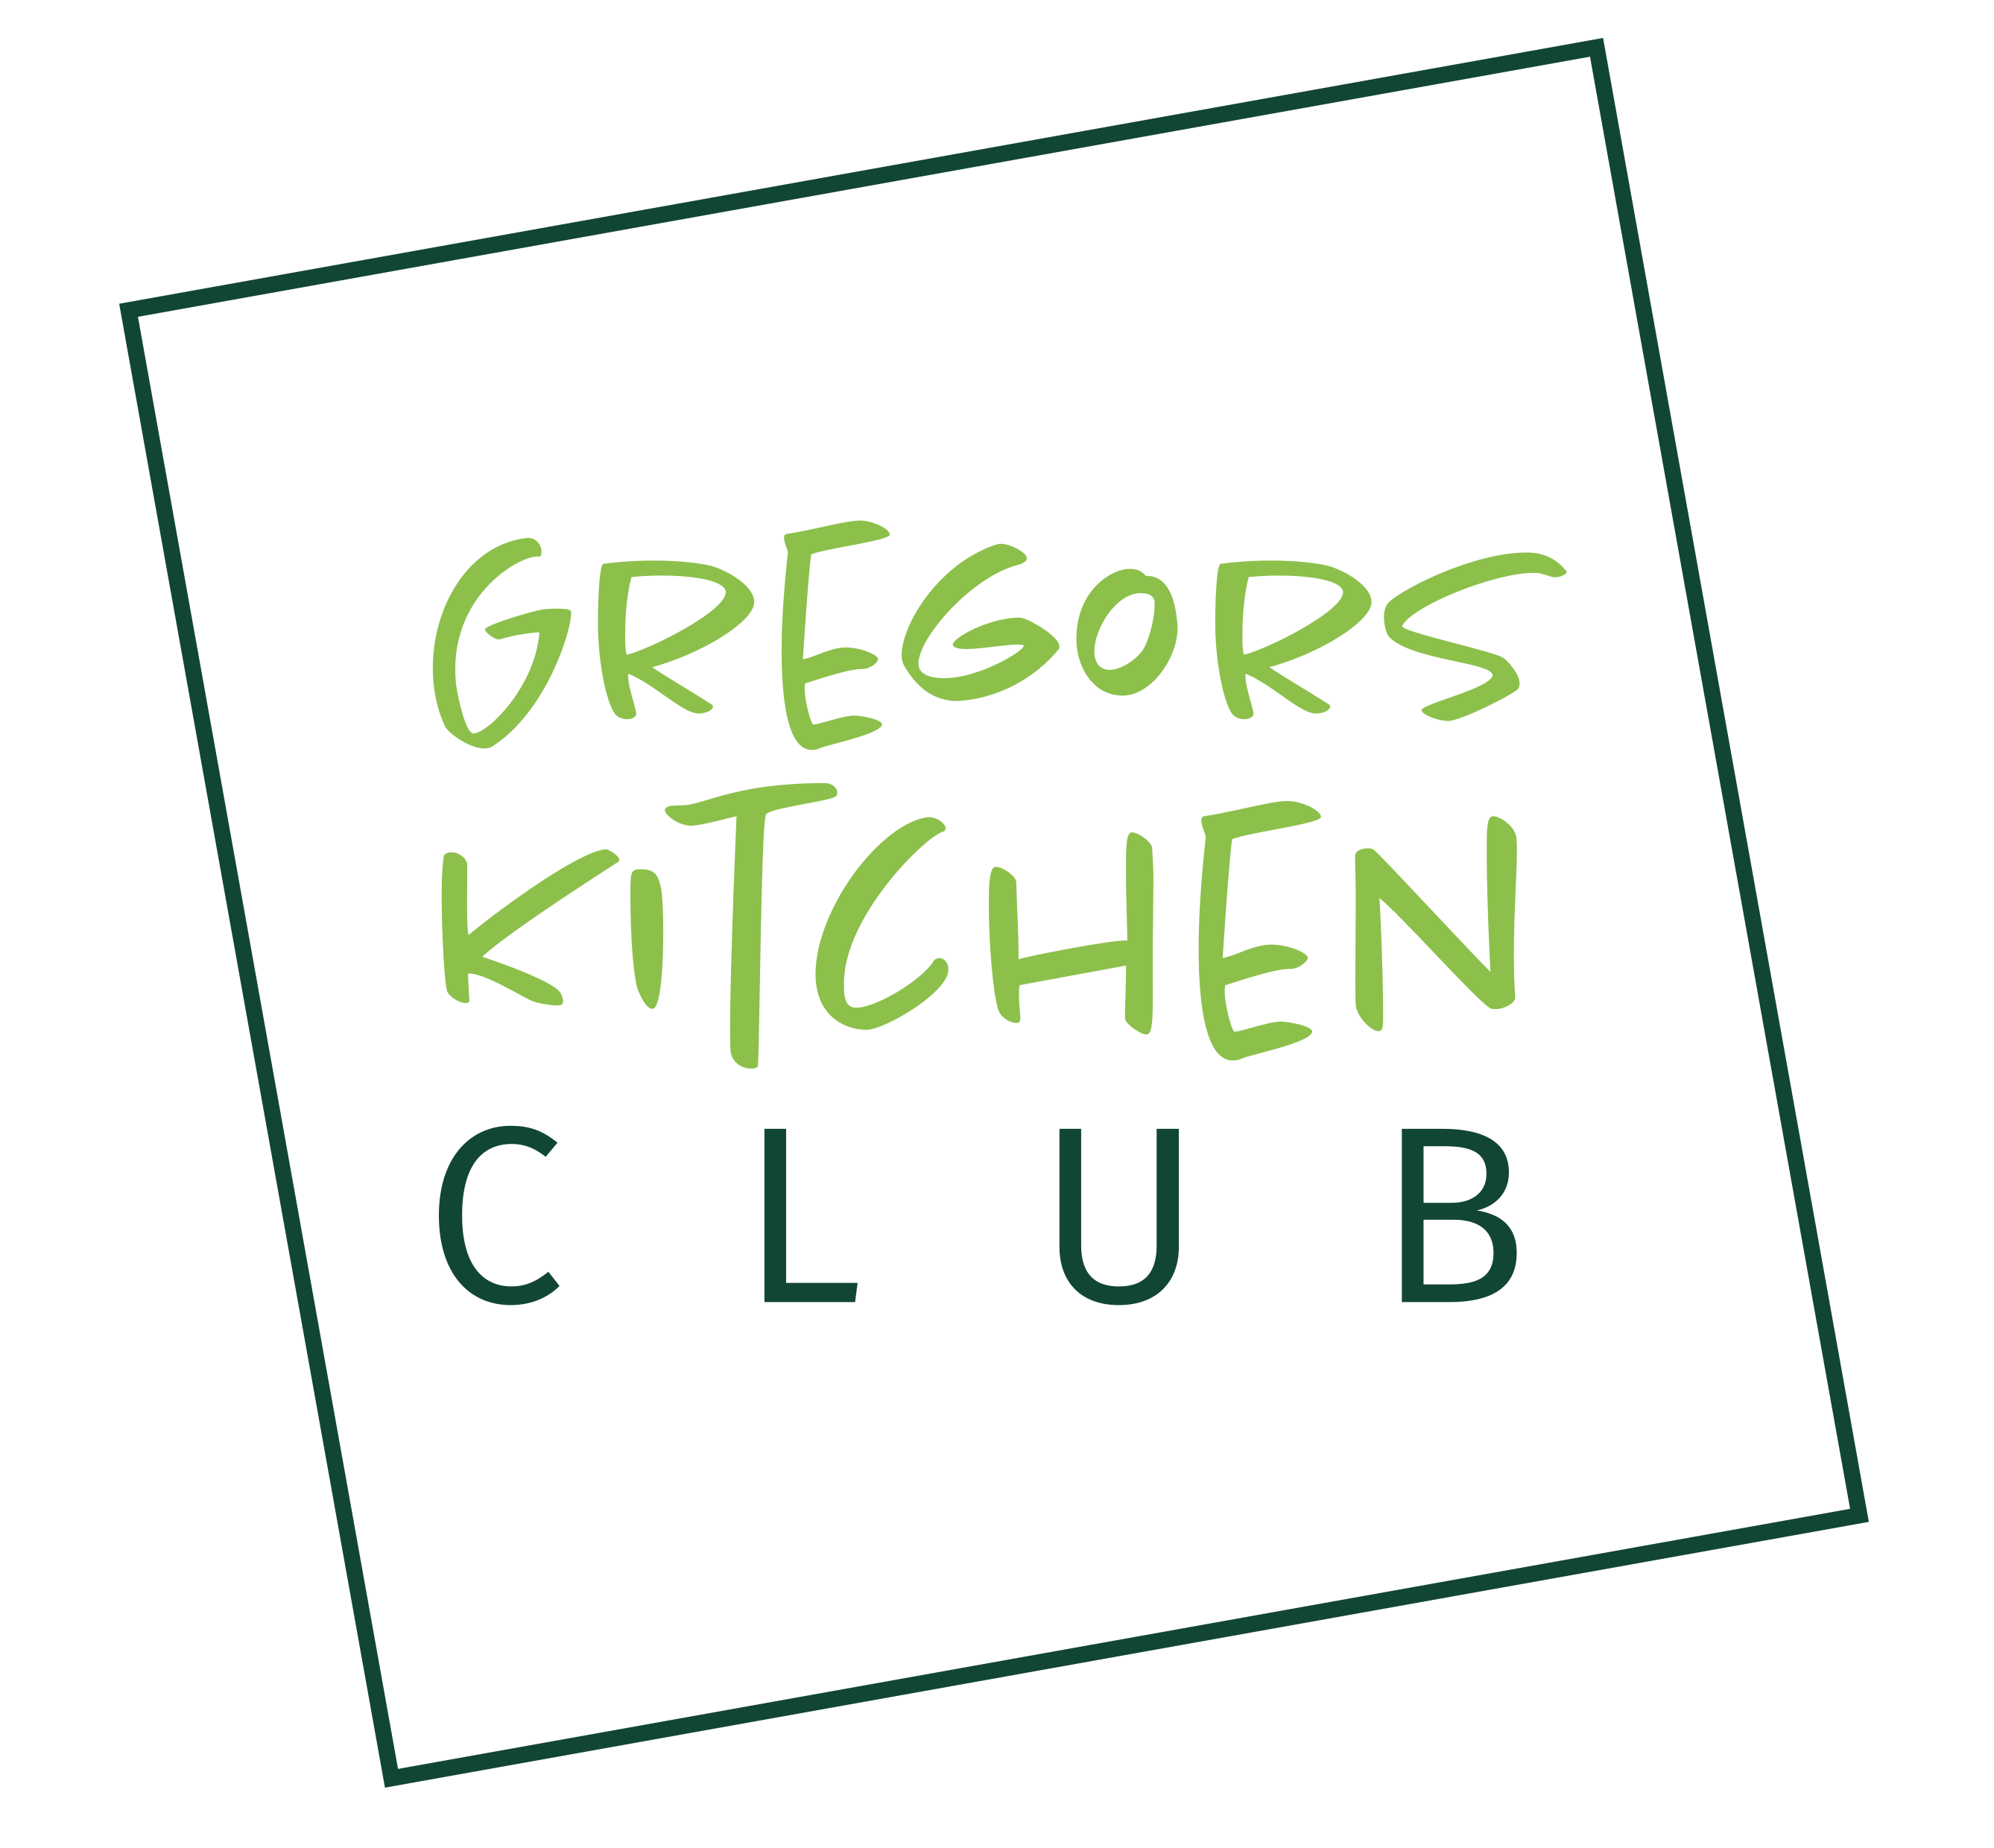 Gregors Kitchen Club